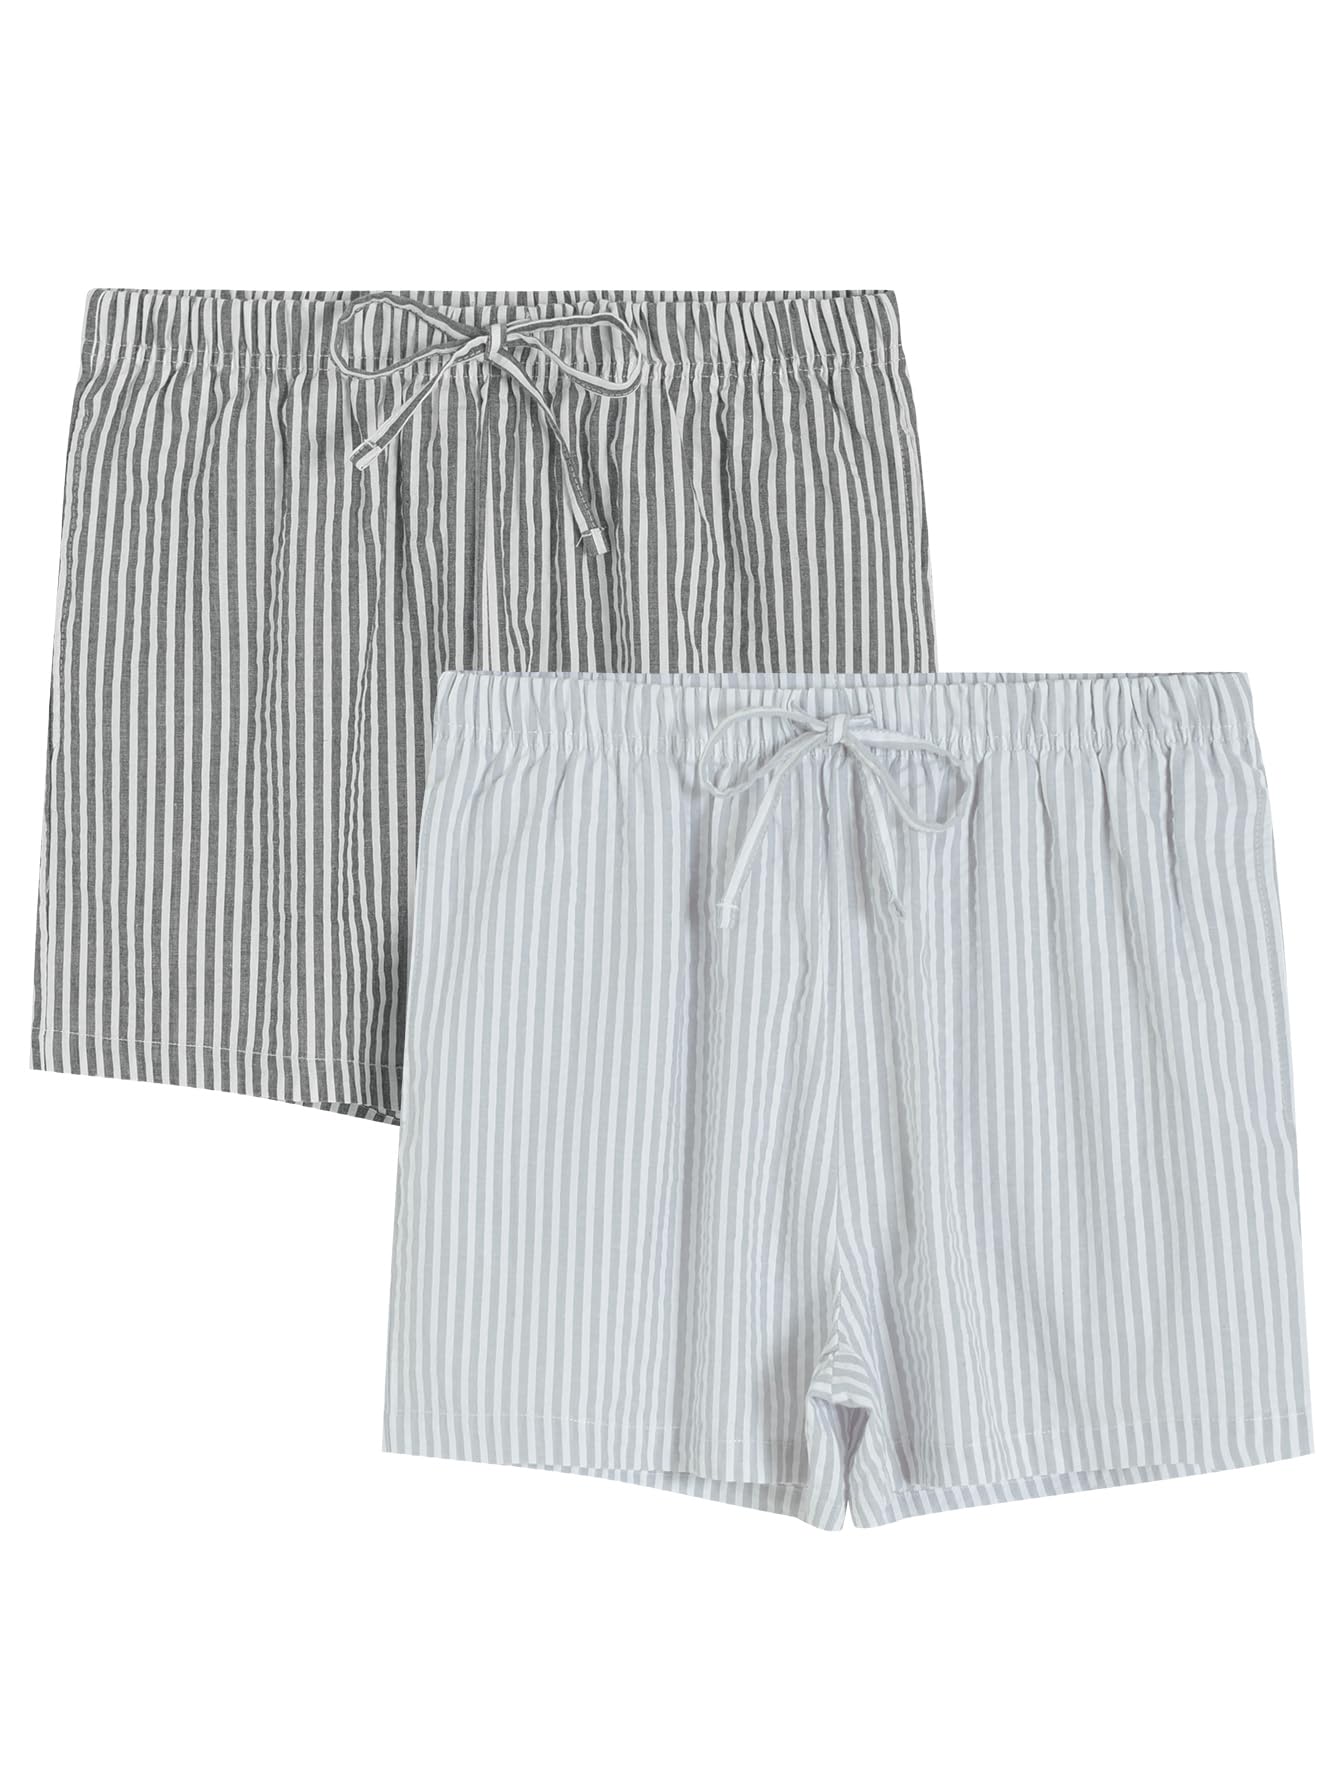 Women's Cotton Pajama Shorts Soft Seersucker Sleep Shorts Pack